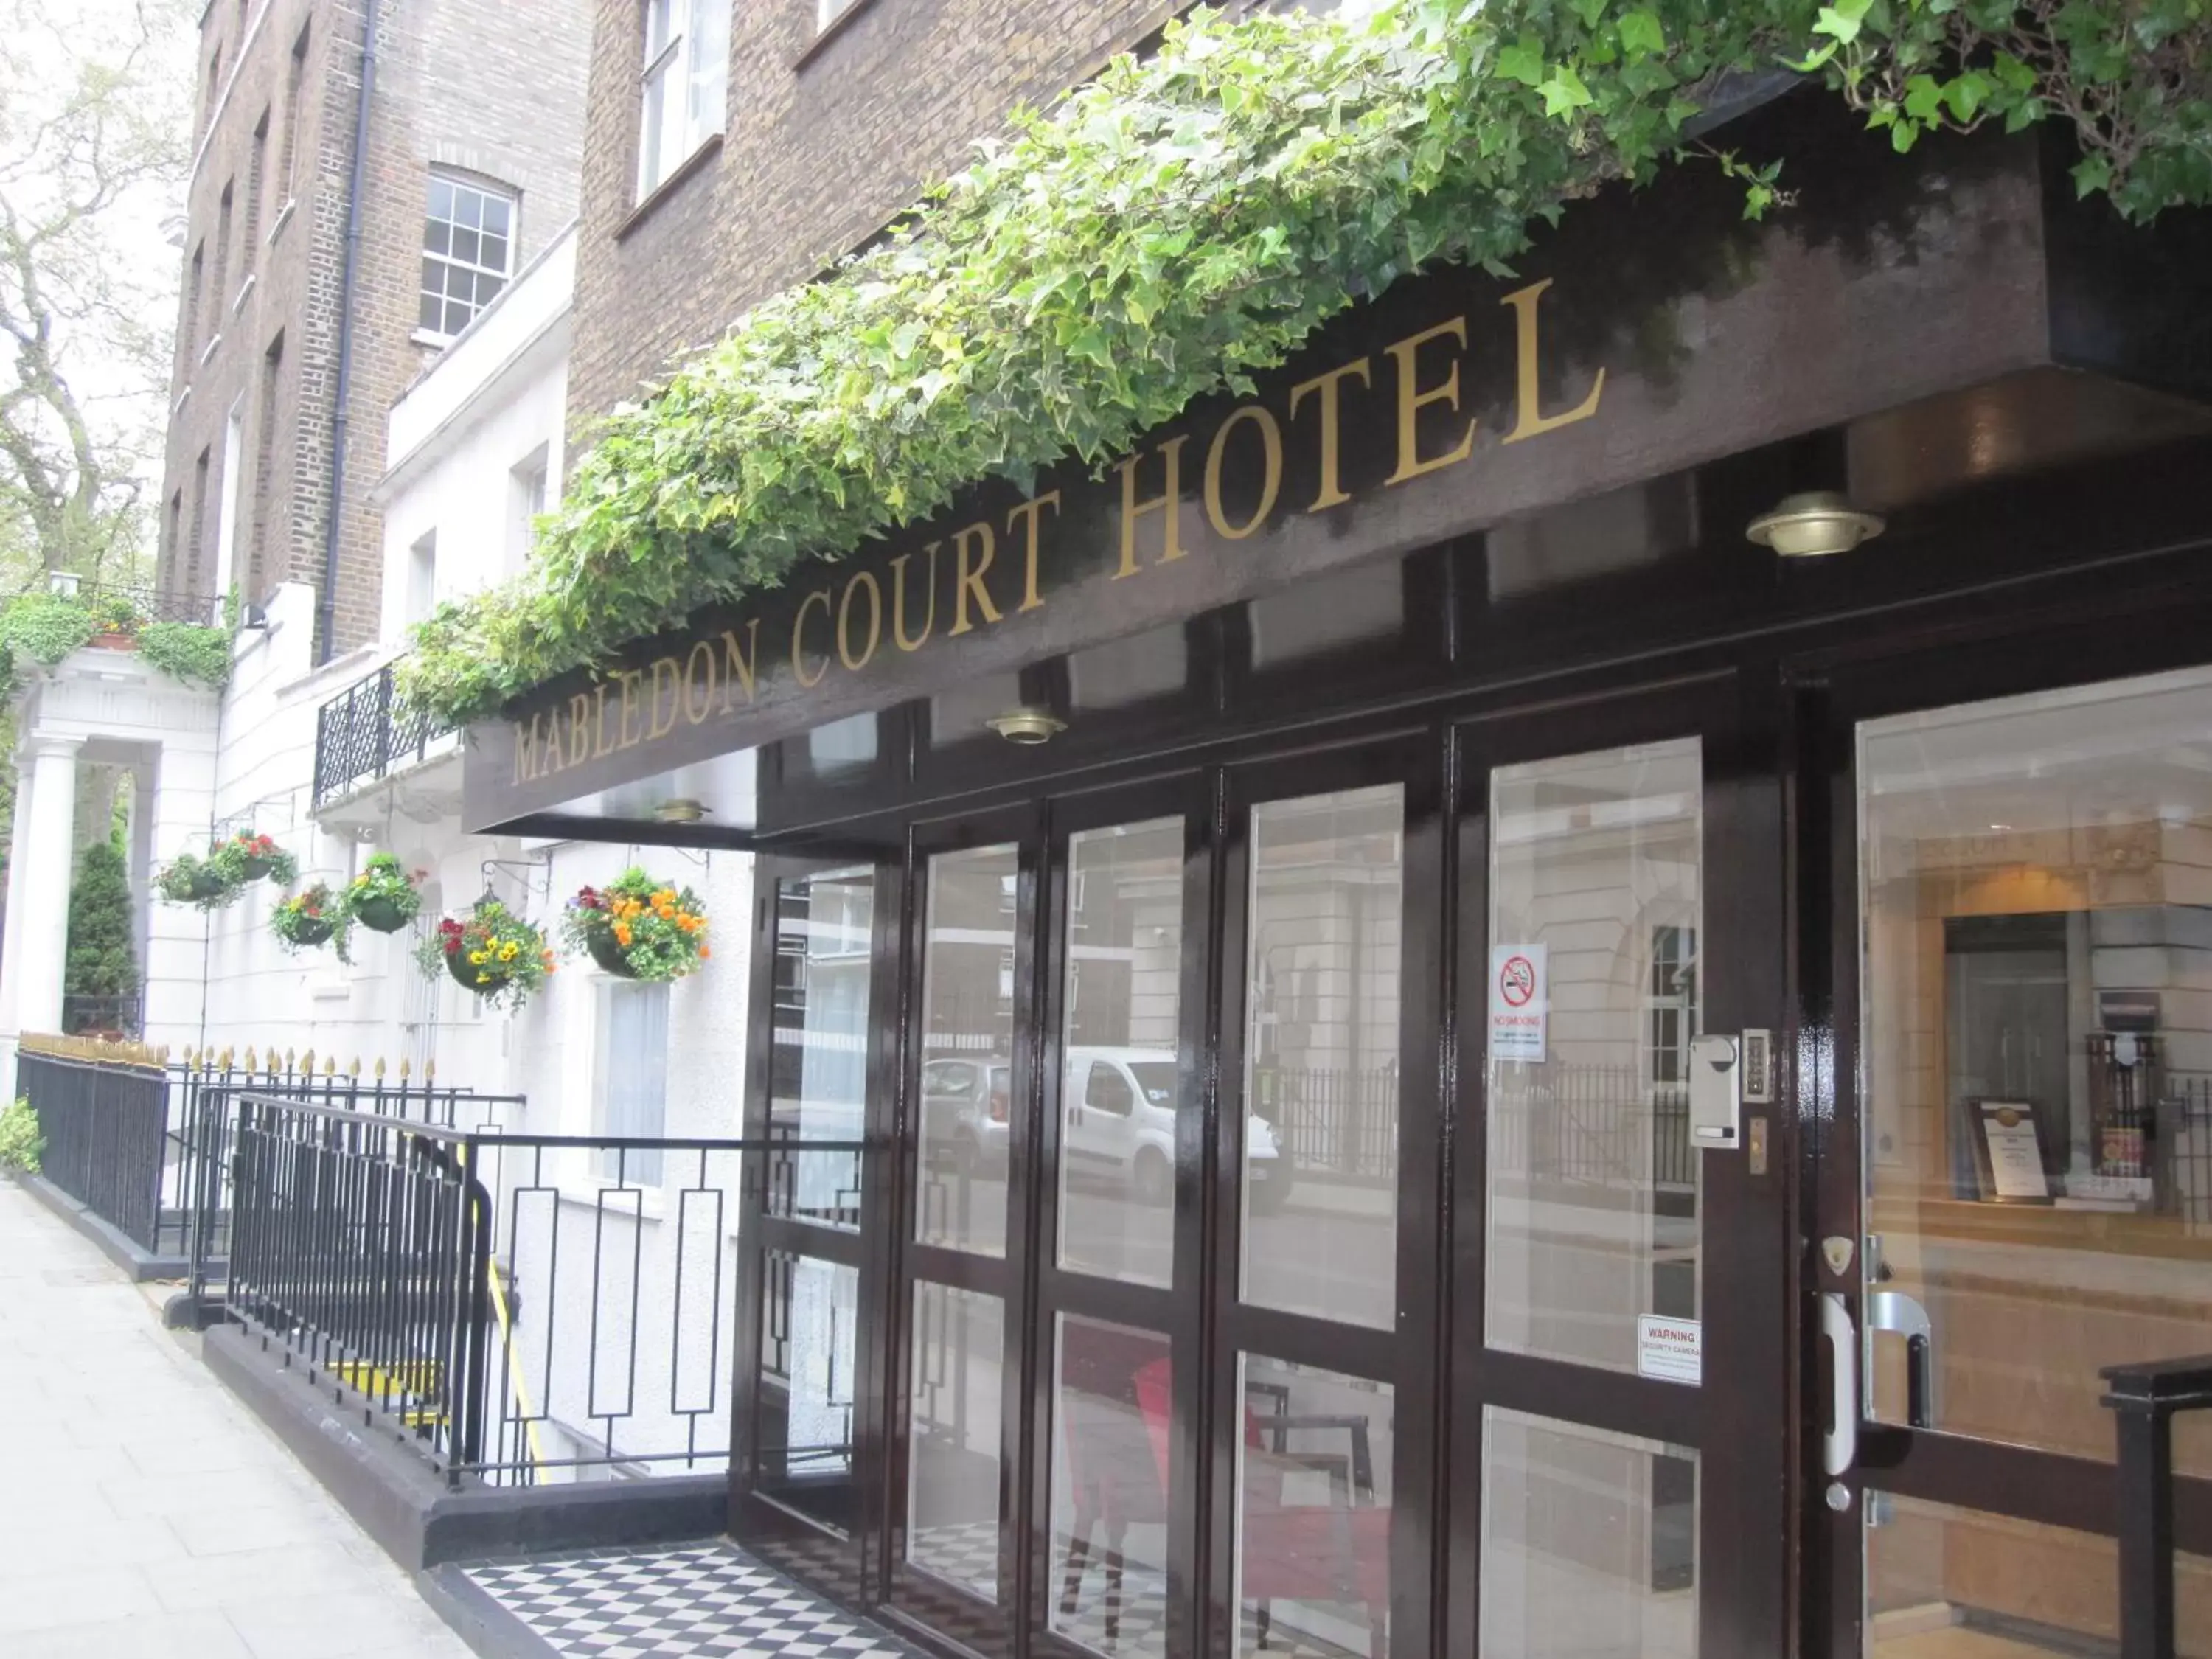 Facade/entrance in Mabledon Court Hotel